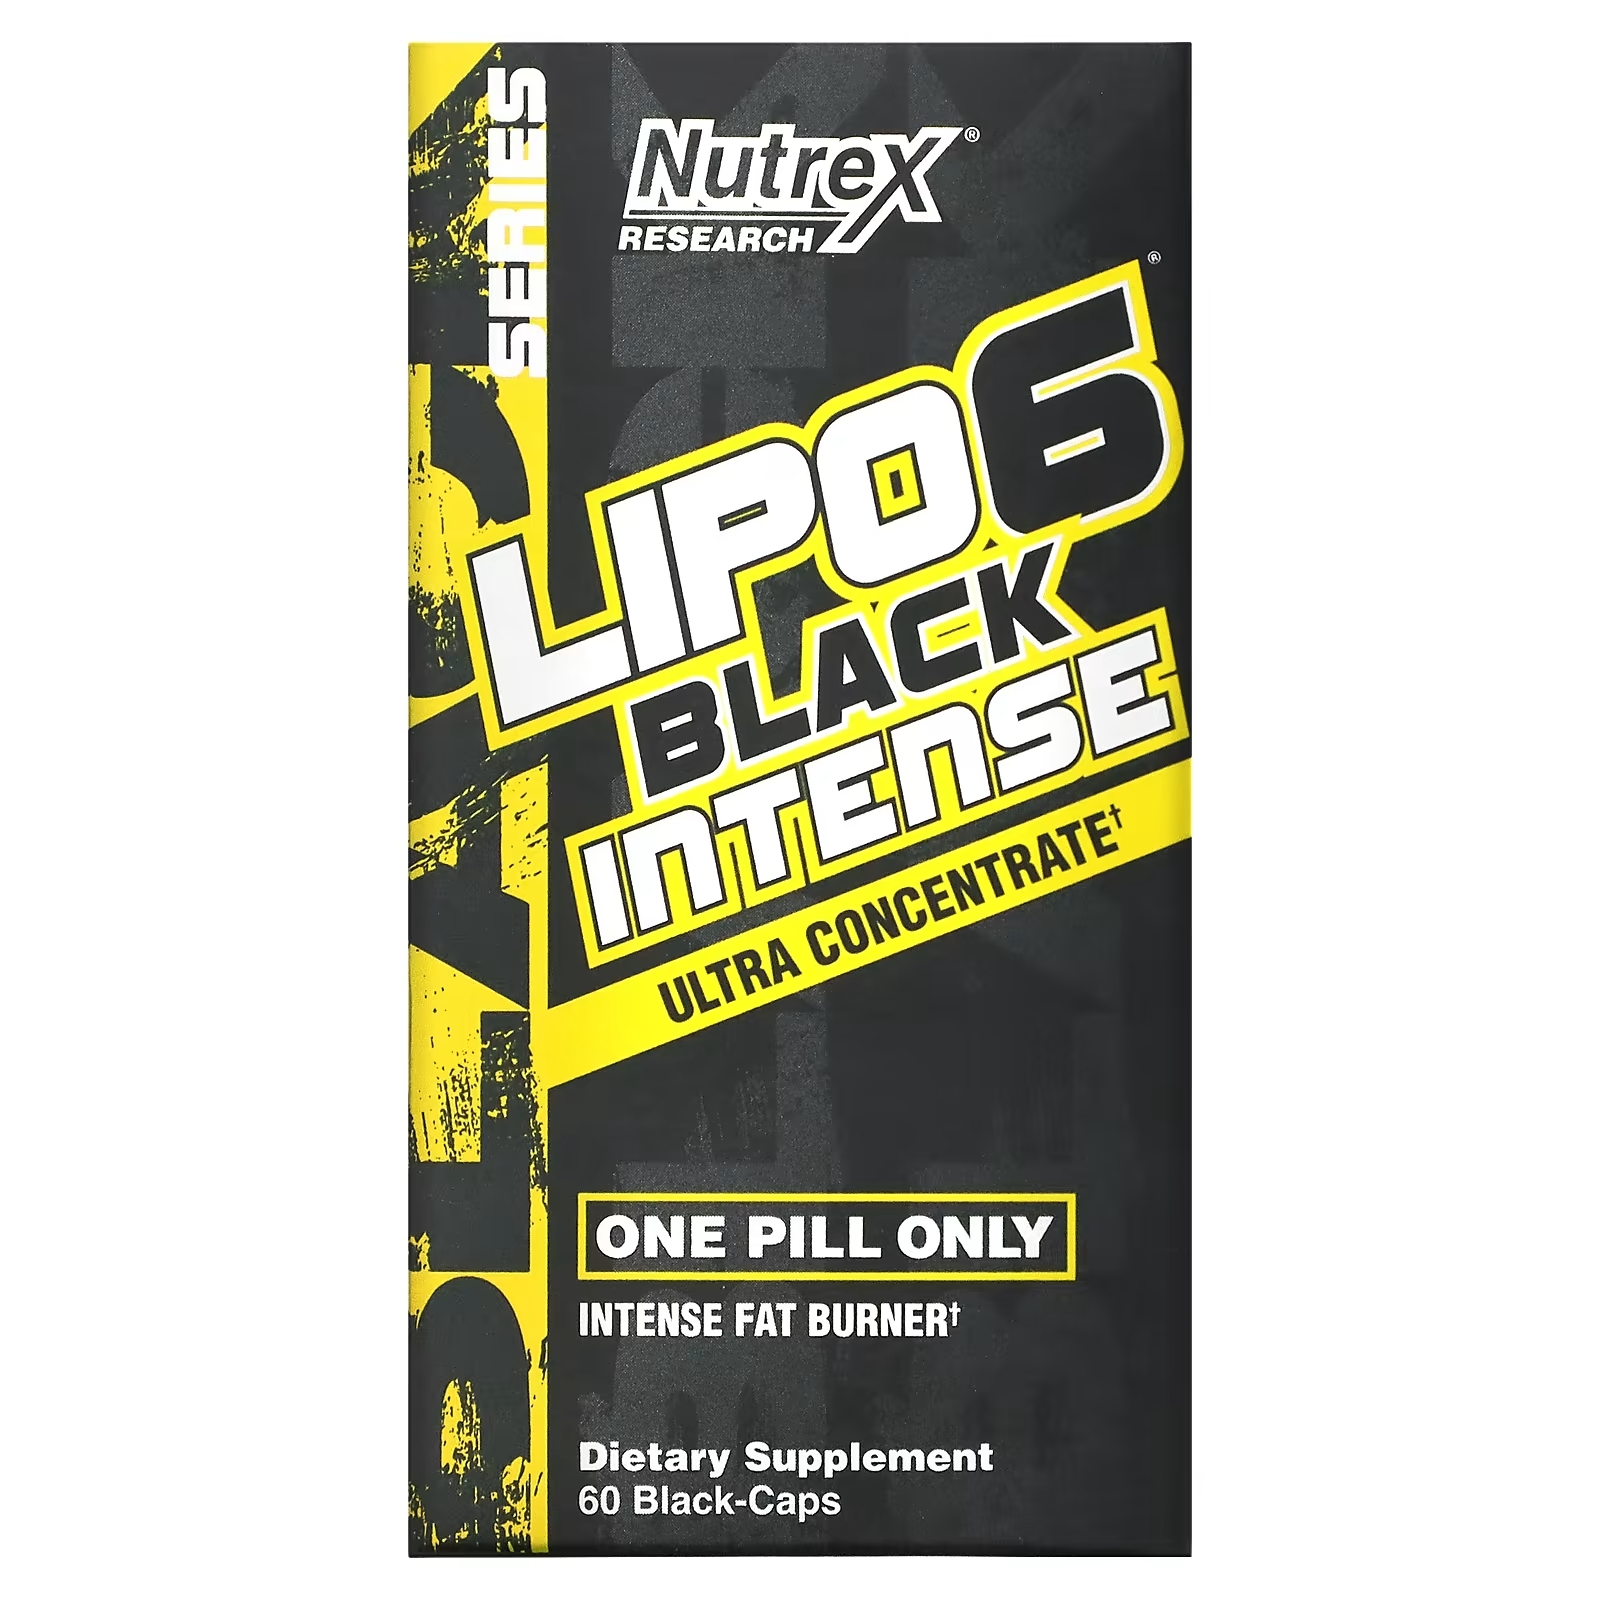 Ультраконцентрат Nutrex Research LIPO-6 Black Intense, 60 капсул lipo 6 black thyrolean 60 капсул